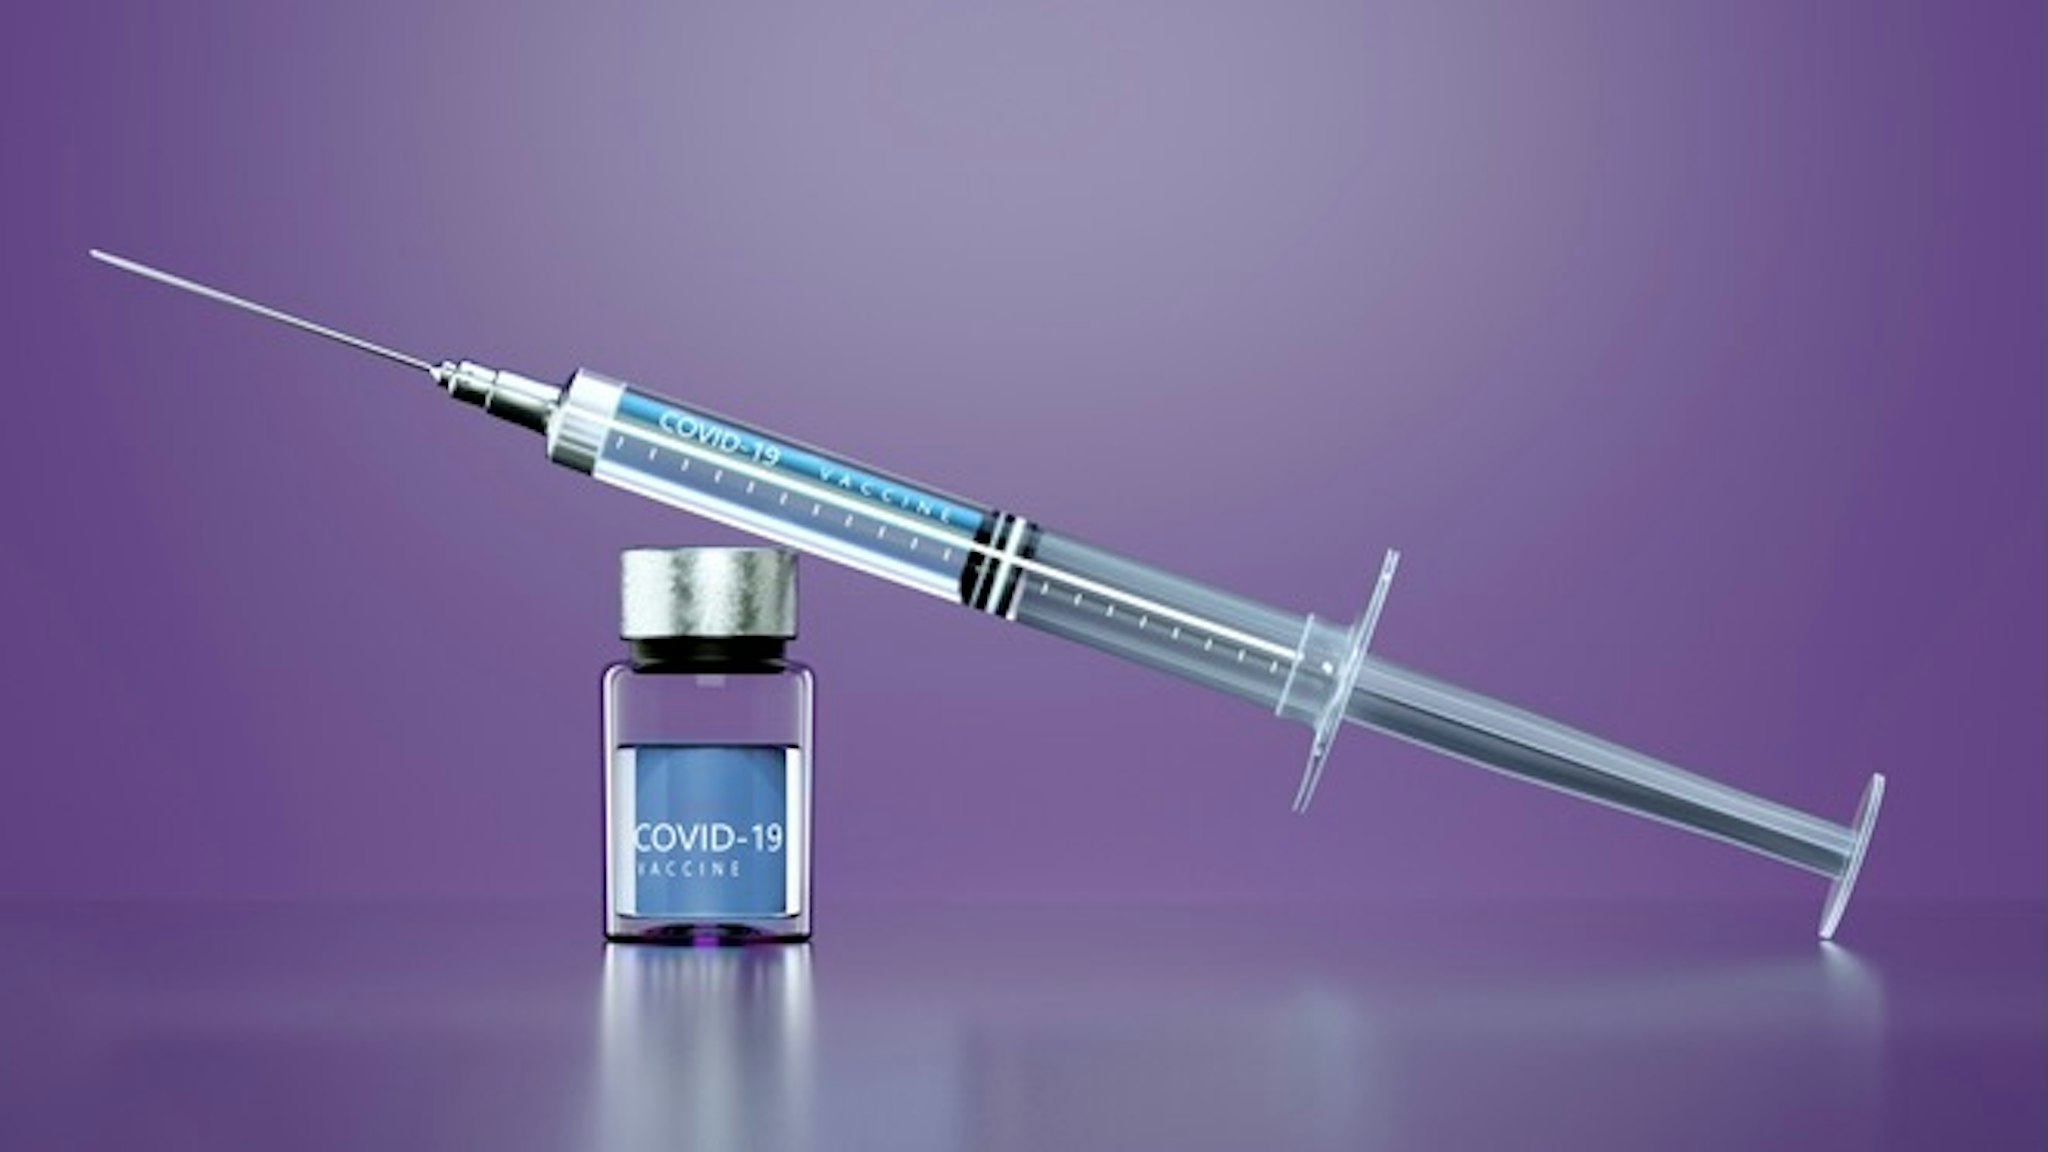 Covid-19 vaccine - stock photo Digital generated image of Syringe with anti COVID-19 vaccine on purple background. Andriy Onufriyenko via Getty Images